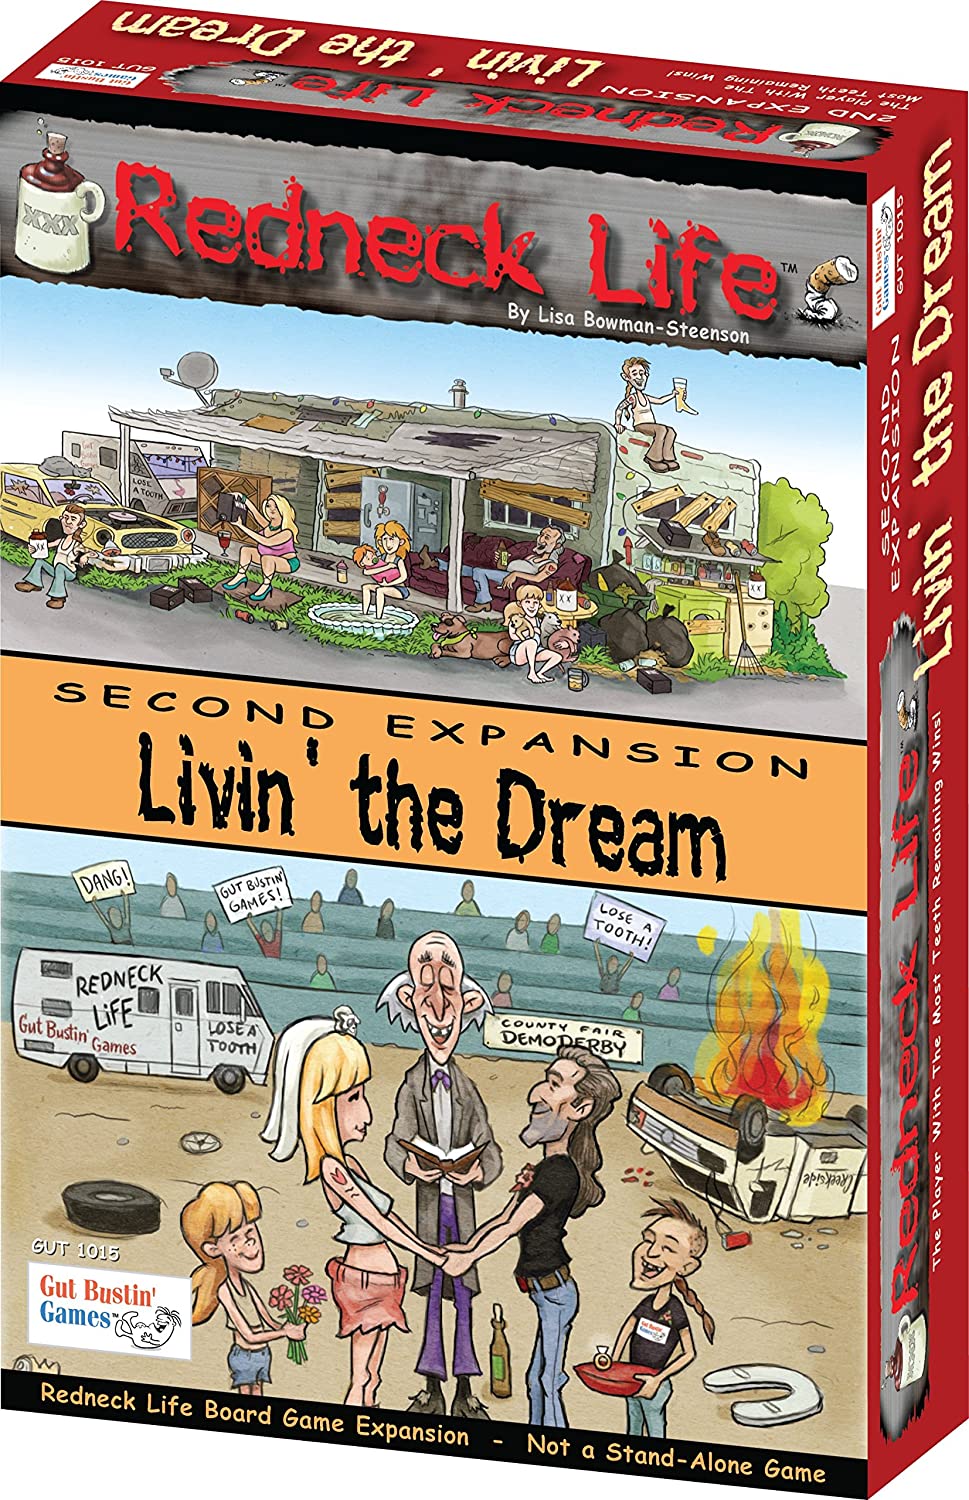 Redneck Life - Livin' the Dream Expansion